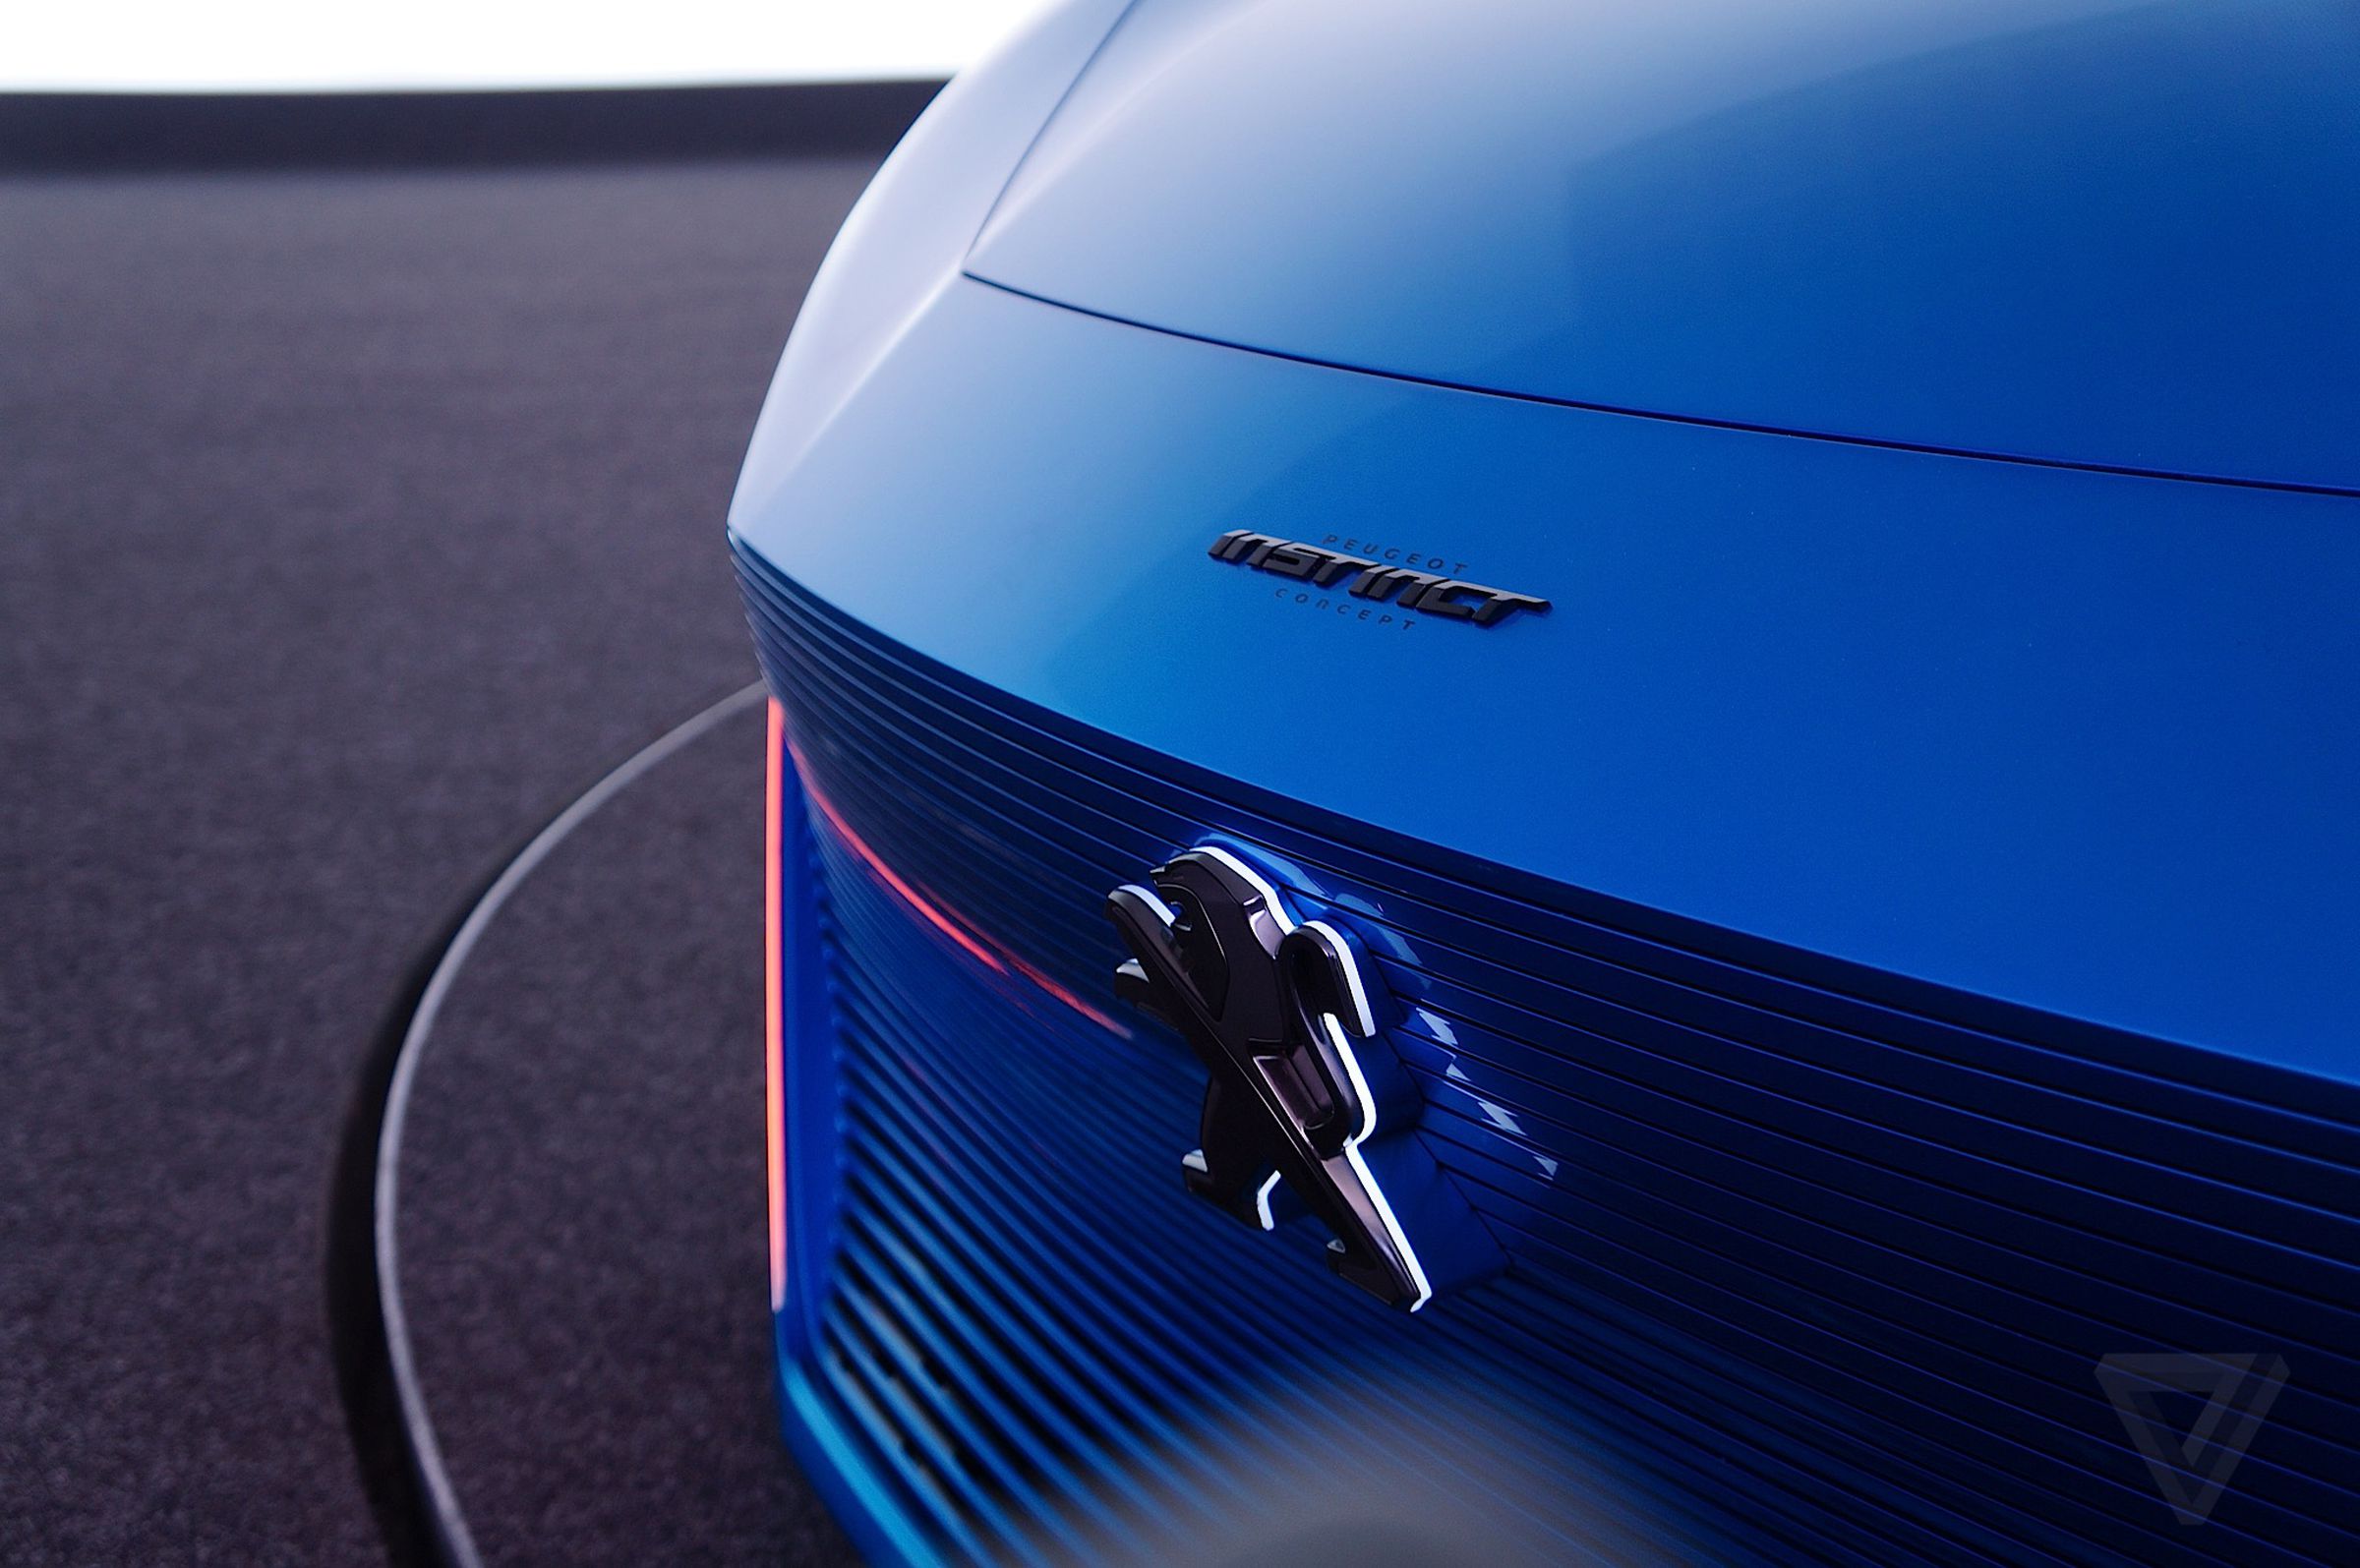 Peugeot’s iconic lion logo lights up when the Instinct is in autonomous mode. 